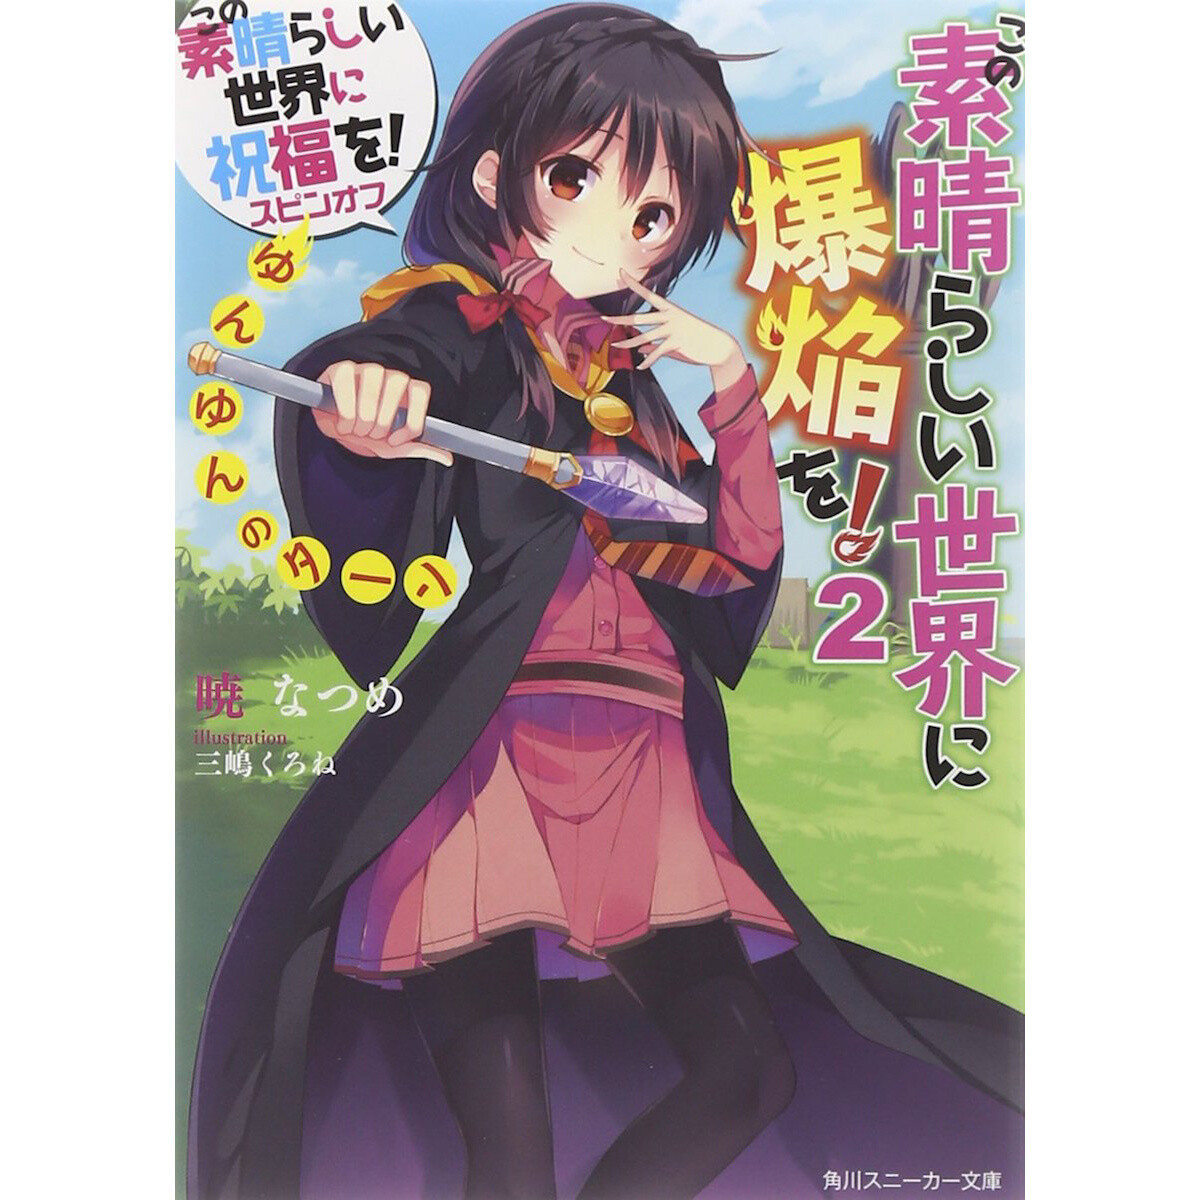  Konosuba: God's Blessing on This Wonderful World!, Vol. 2  (light novel): Love, Witches & Other Delusions! (Konosuba (light novel),  2): 9780316468701: Akatsuki, Natsume, Mishima, Kurone: Books